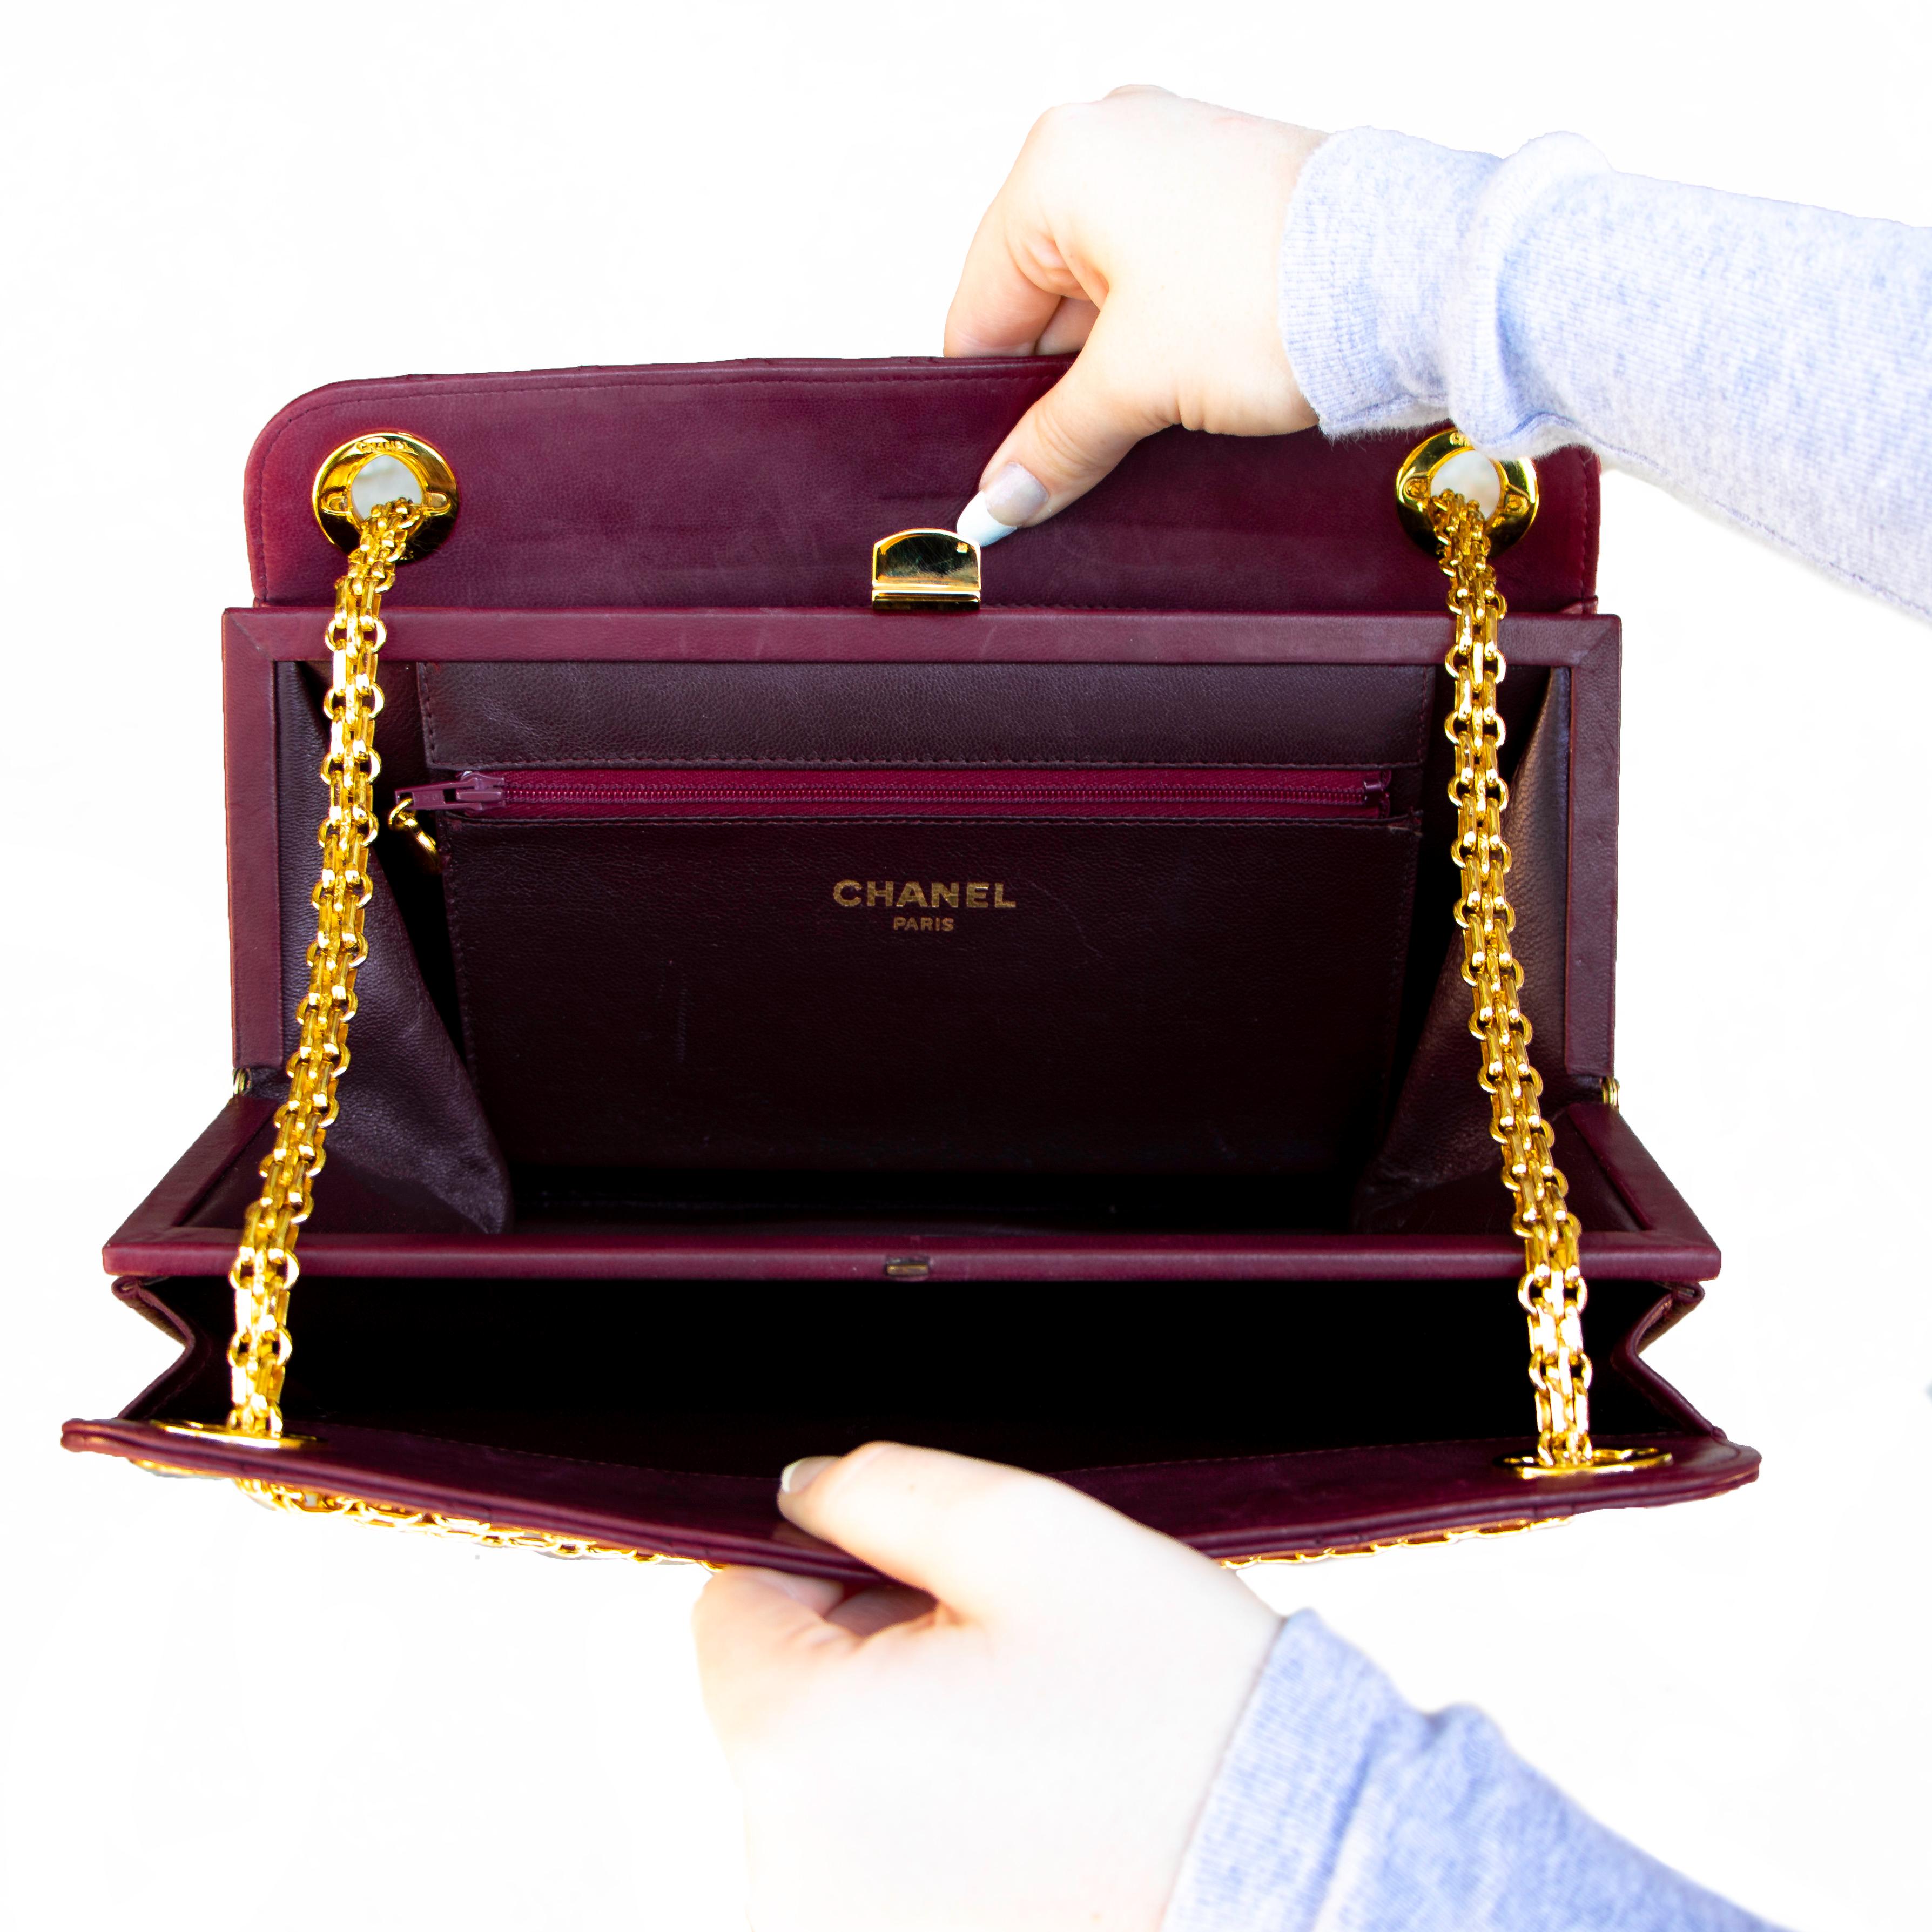 Vintage Brown Chanel Handbag with Gold-Colored Strap 1